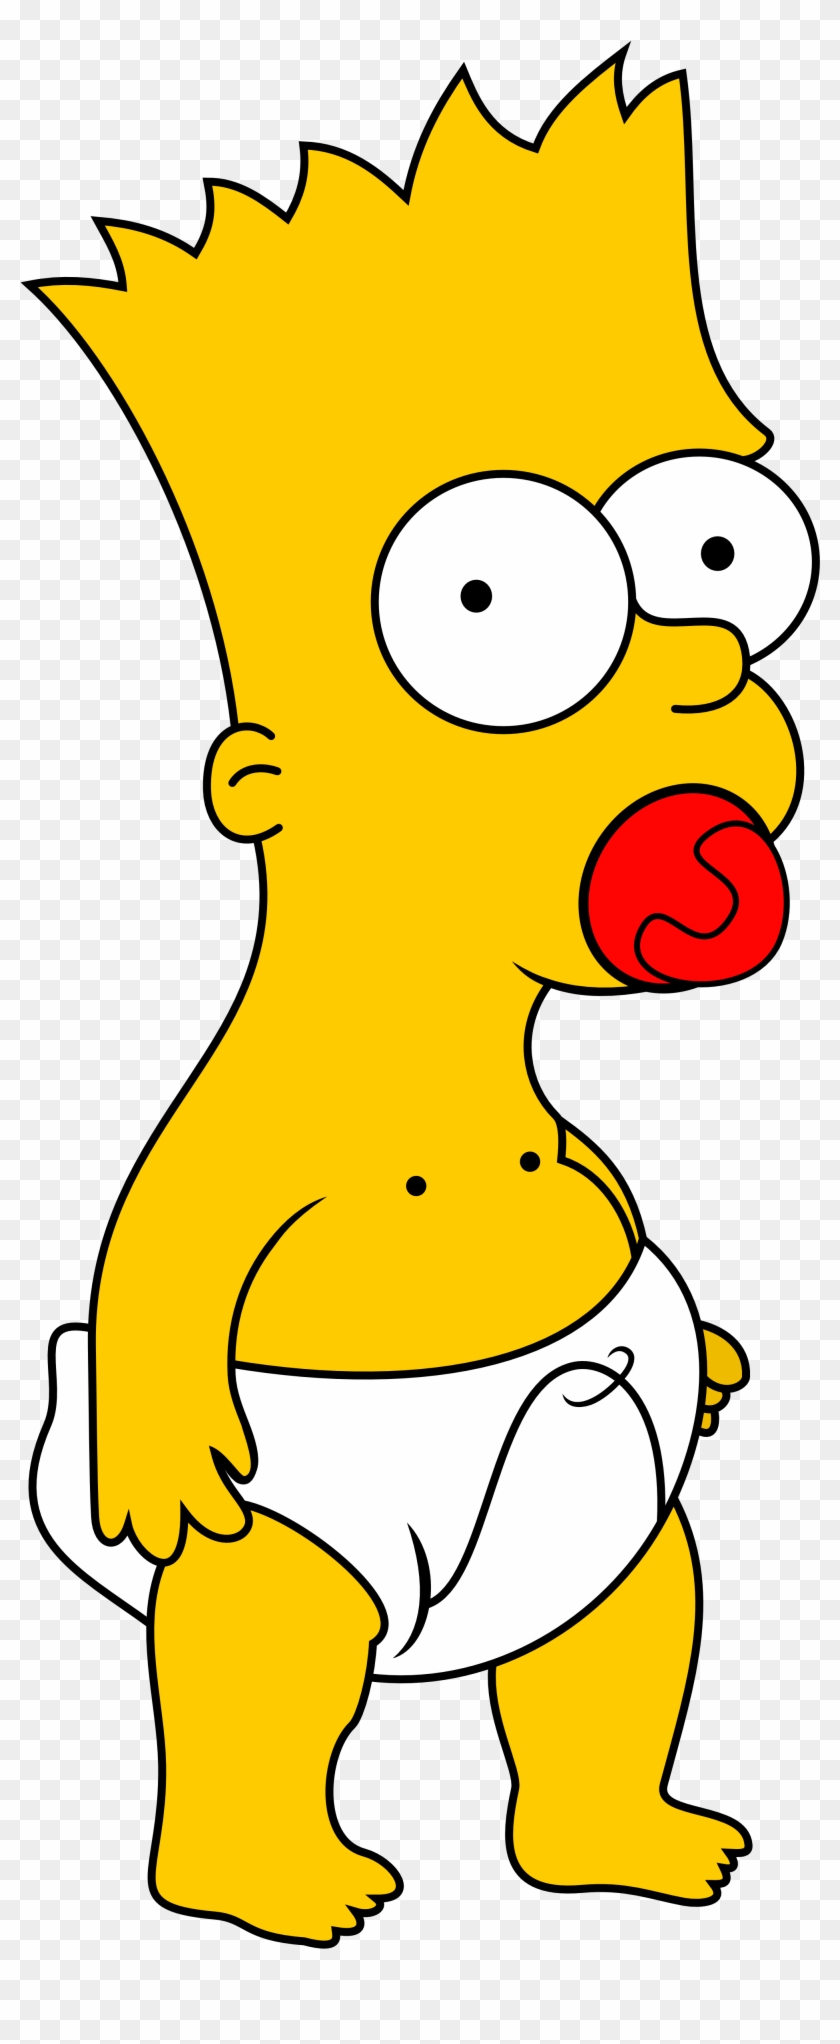 Bart Simpson Lisa Simpson Homer Simpson Maggie Simpson - Baby Bart Simpson Png #941942